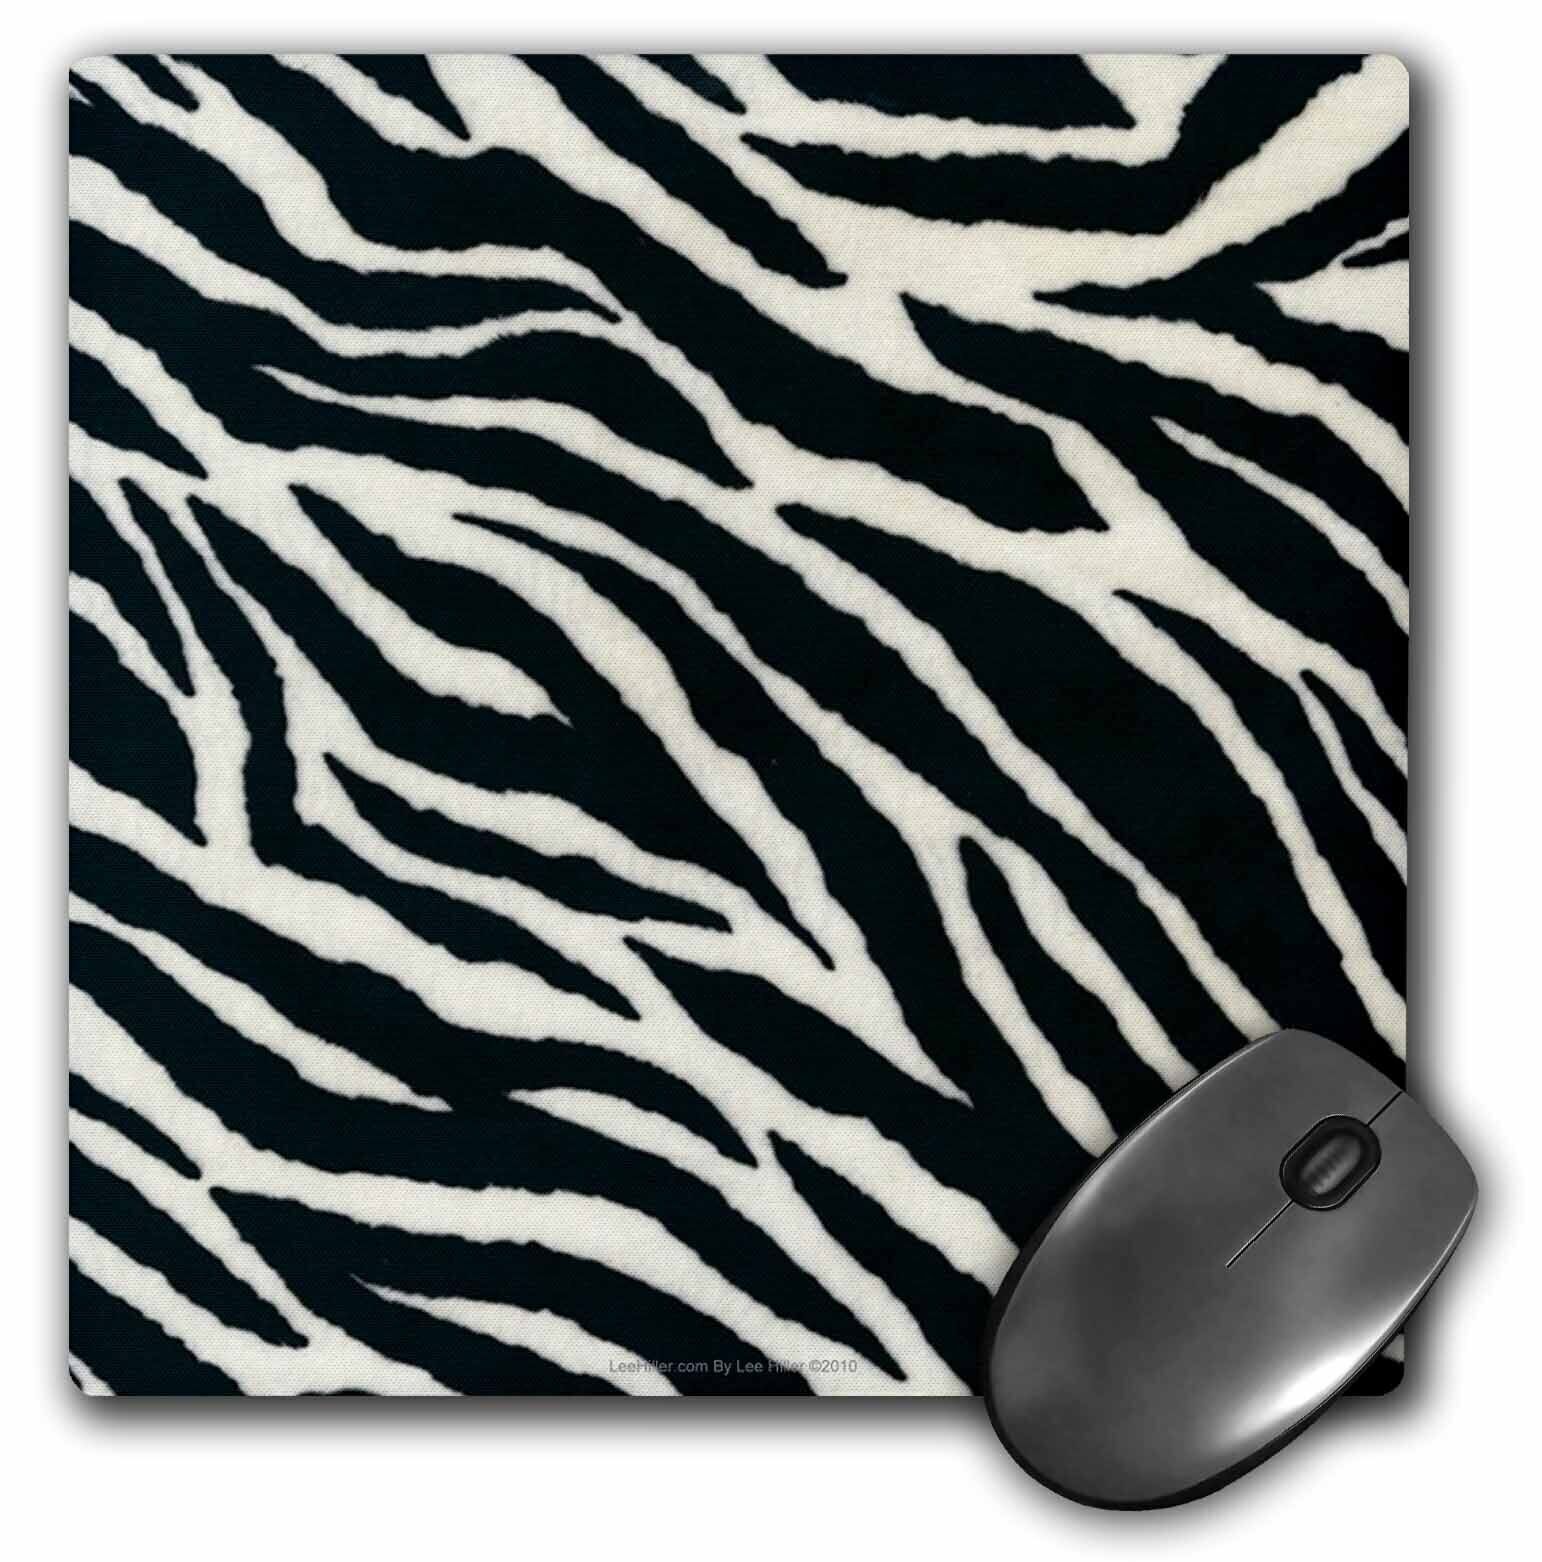 3dRose Black and White Zebra Print MousePad